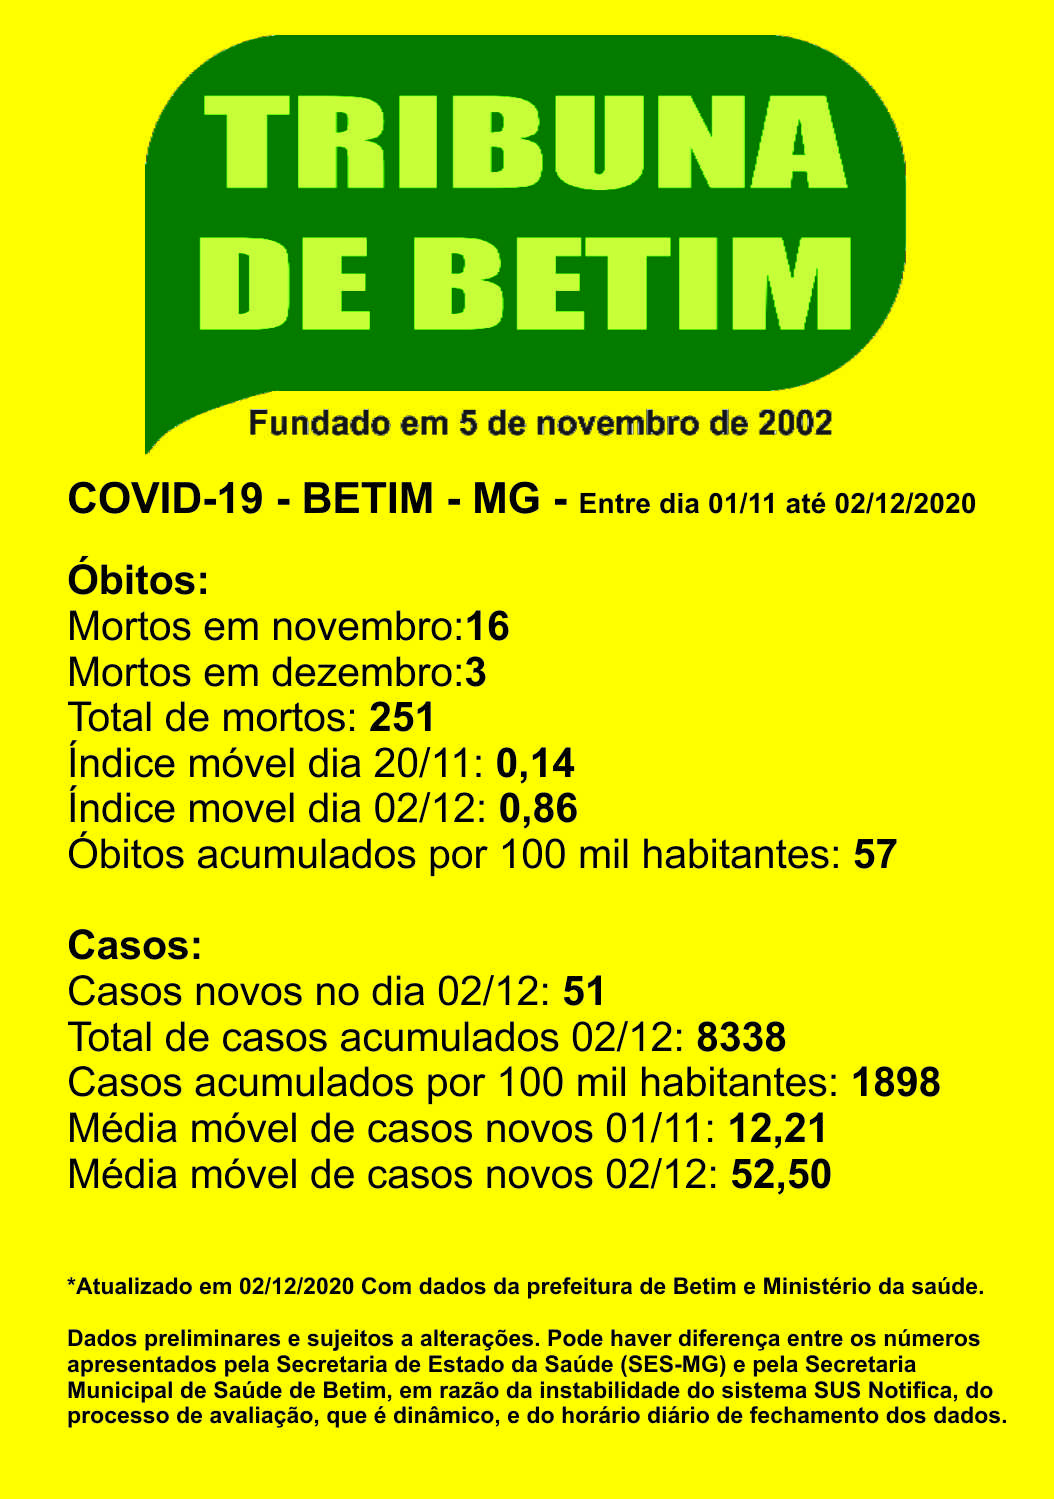 covid_betim_boletim_tribuna-02-12-2020.jpg